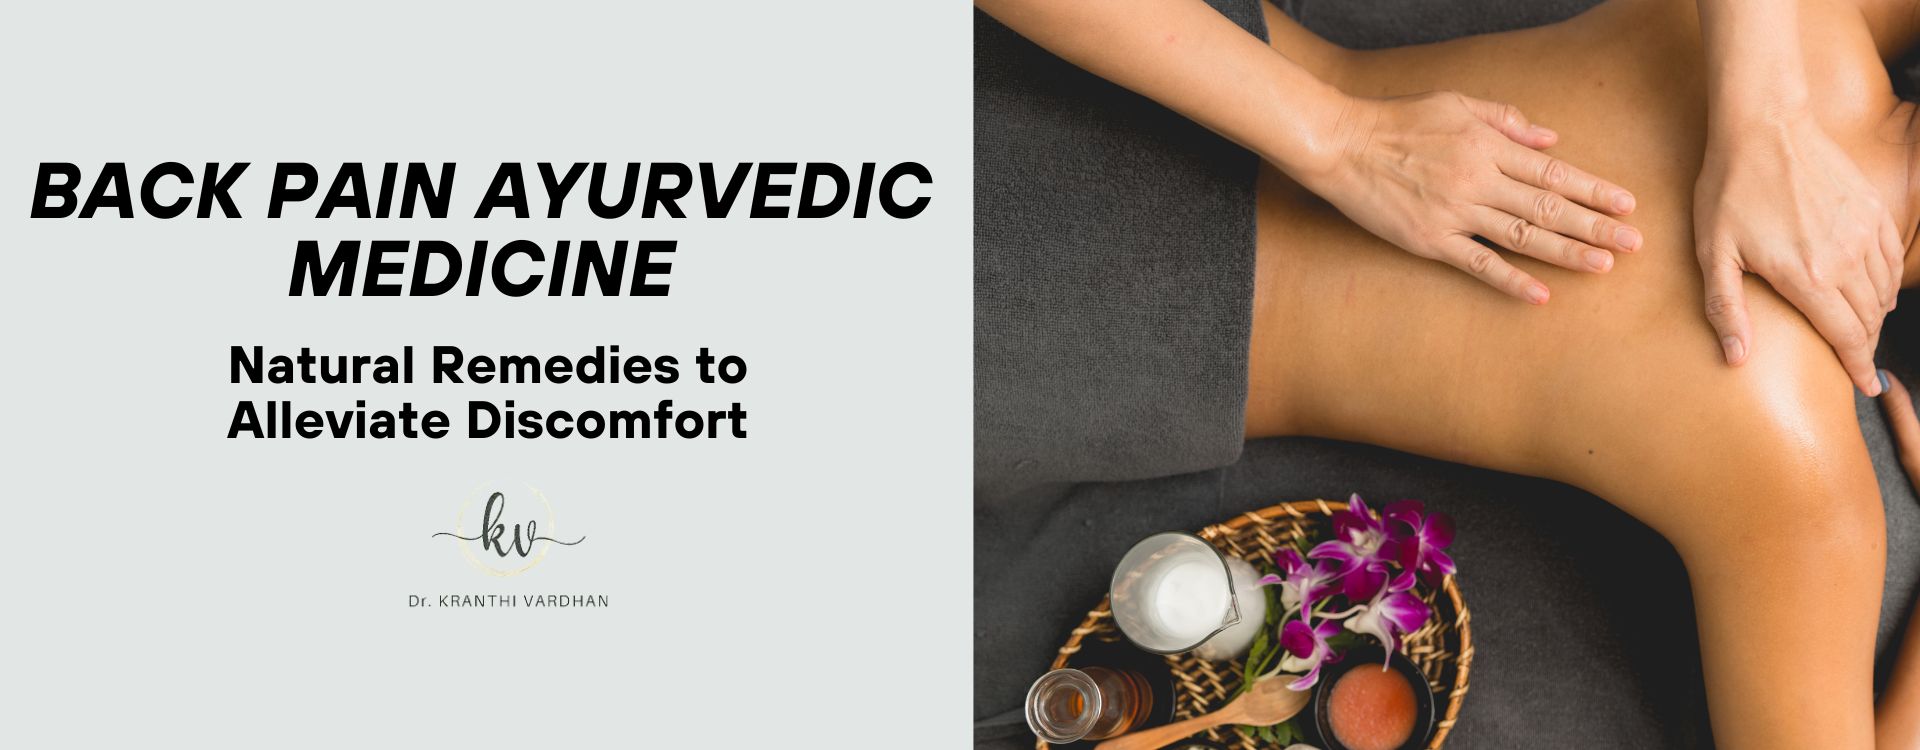 Back Pain Ayurvedic Medicine: Natural Remedies to Alleviate Discomfort